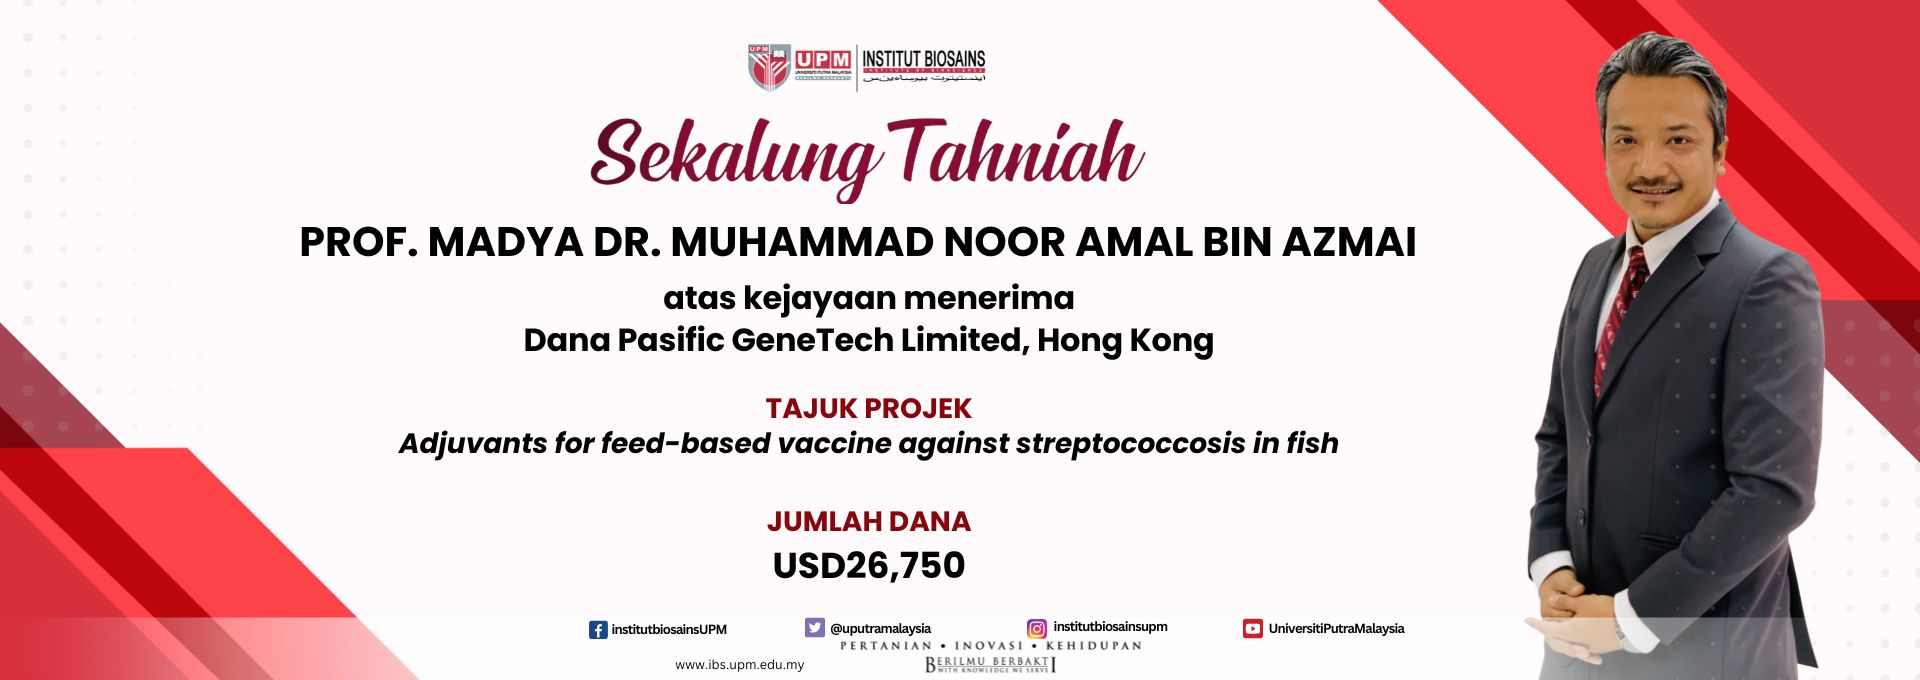 Prof. Madya Dr. Muhammad Noor Amal Azmai atas kejayaan menerima dana Pacific GeneTech Limited, Hong Kong bagi projek Adjuvants for feed-based vaccine against streptococcosis in fish